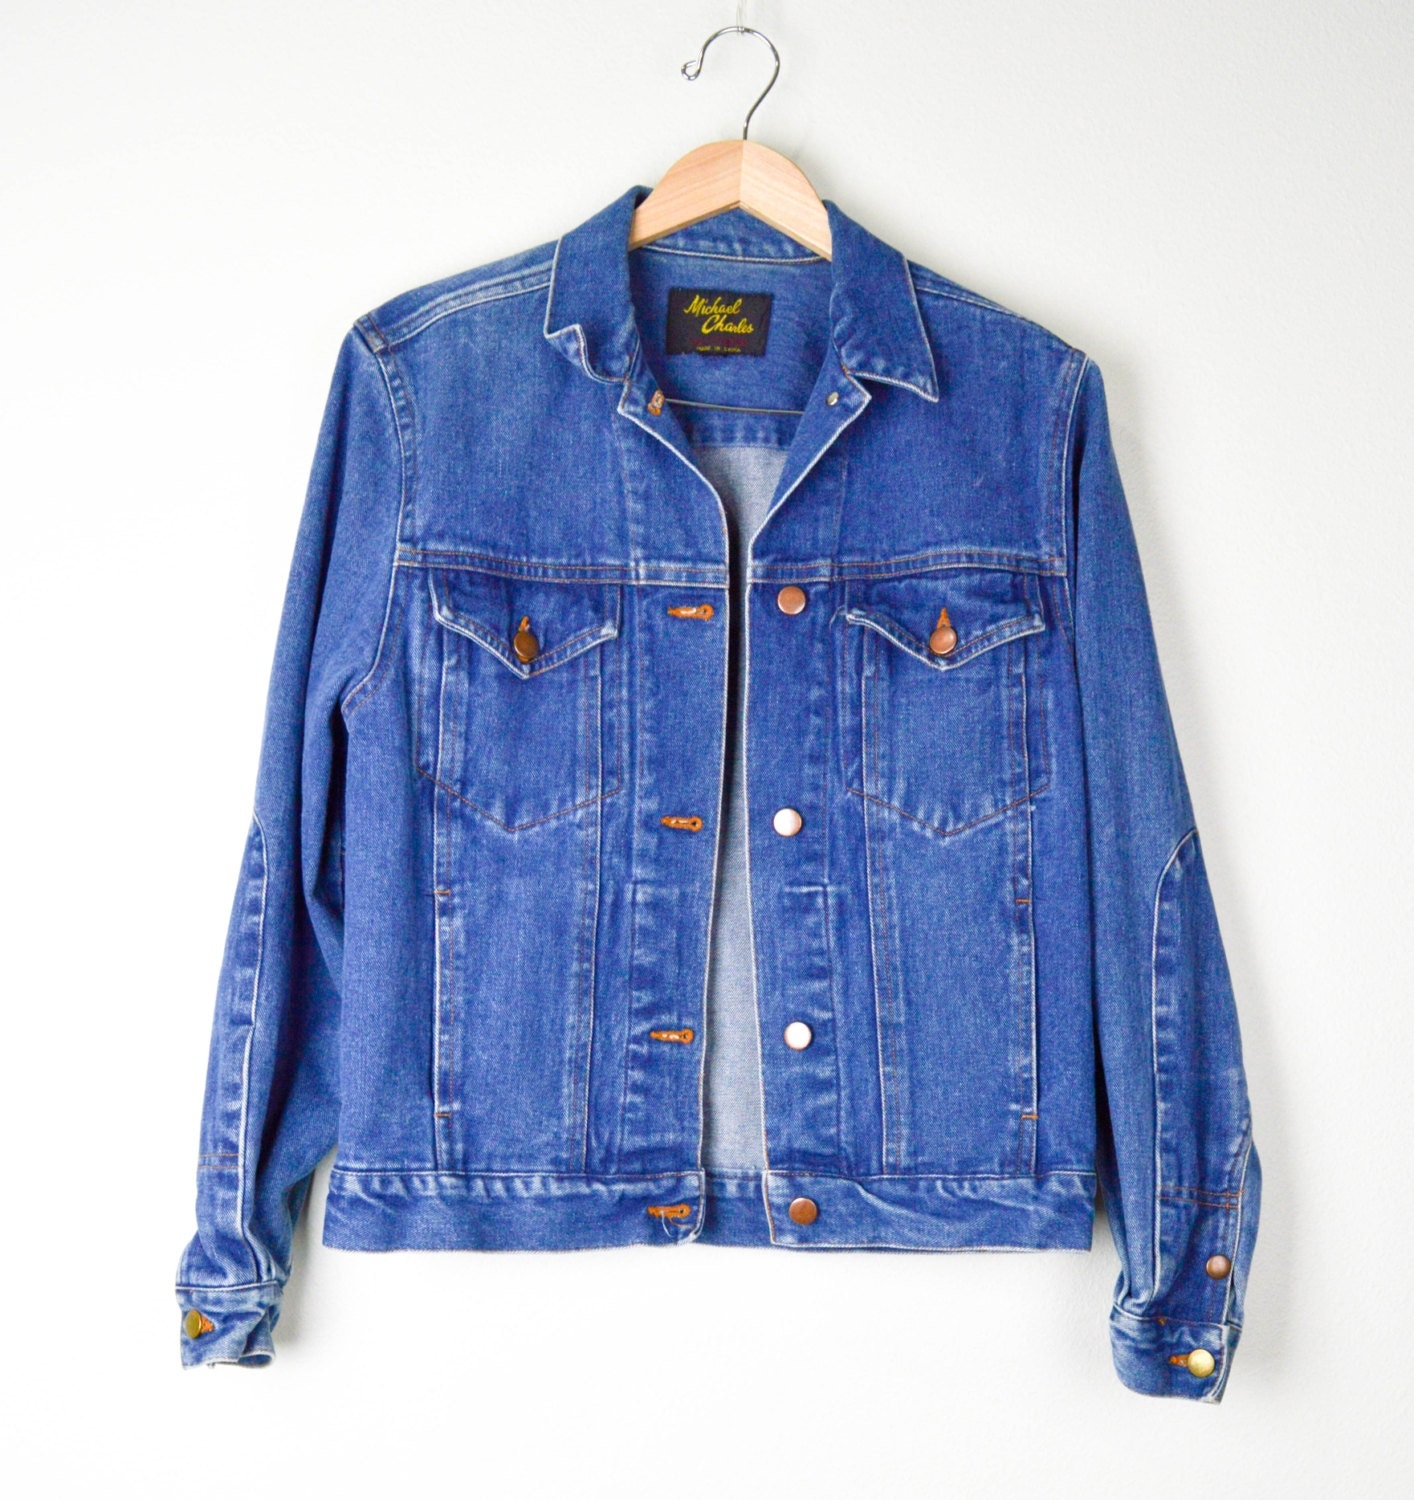 70s Denim Jacket Vintage Jean Jacket Vintage Clothing 70s